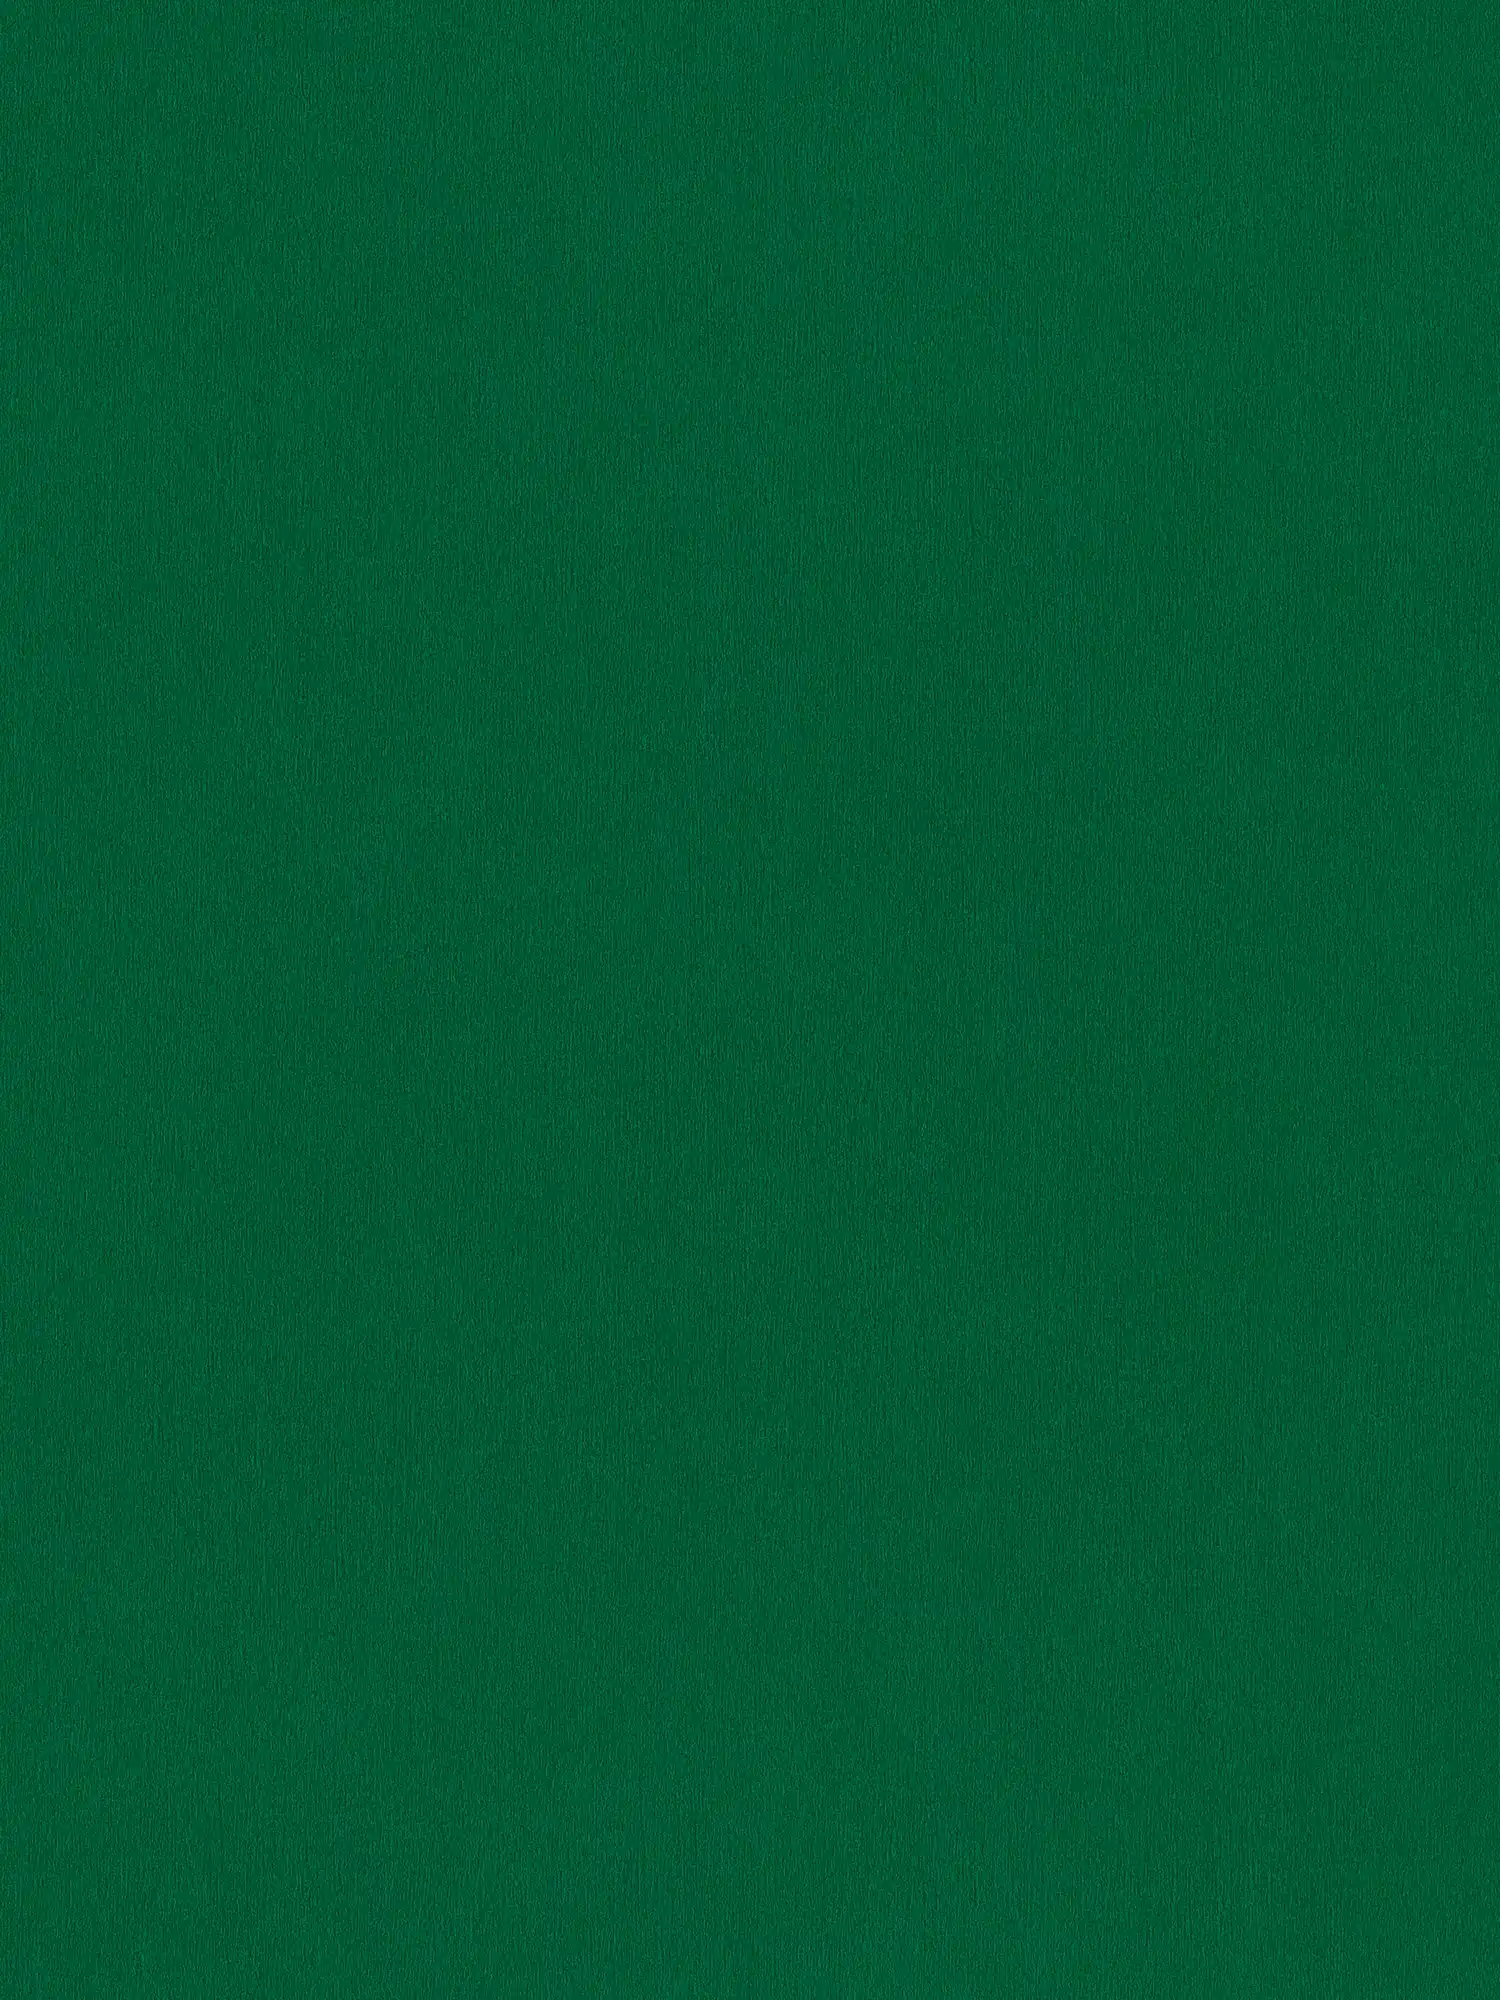 Wallpaper dark green plain, satin & smooth - green
